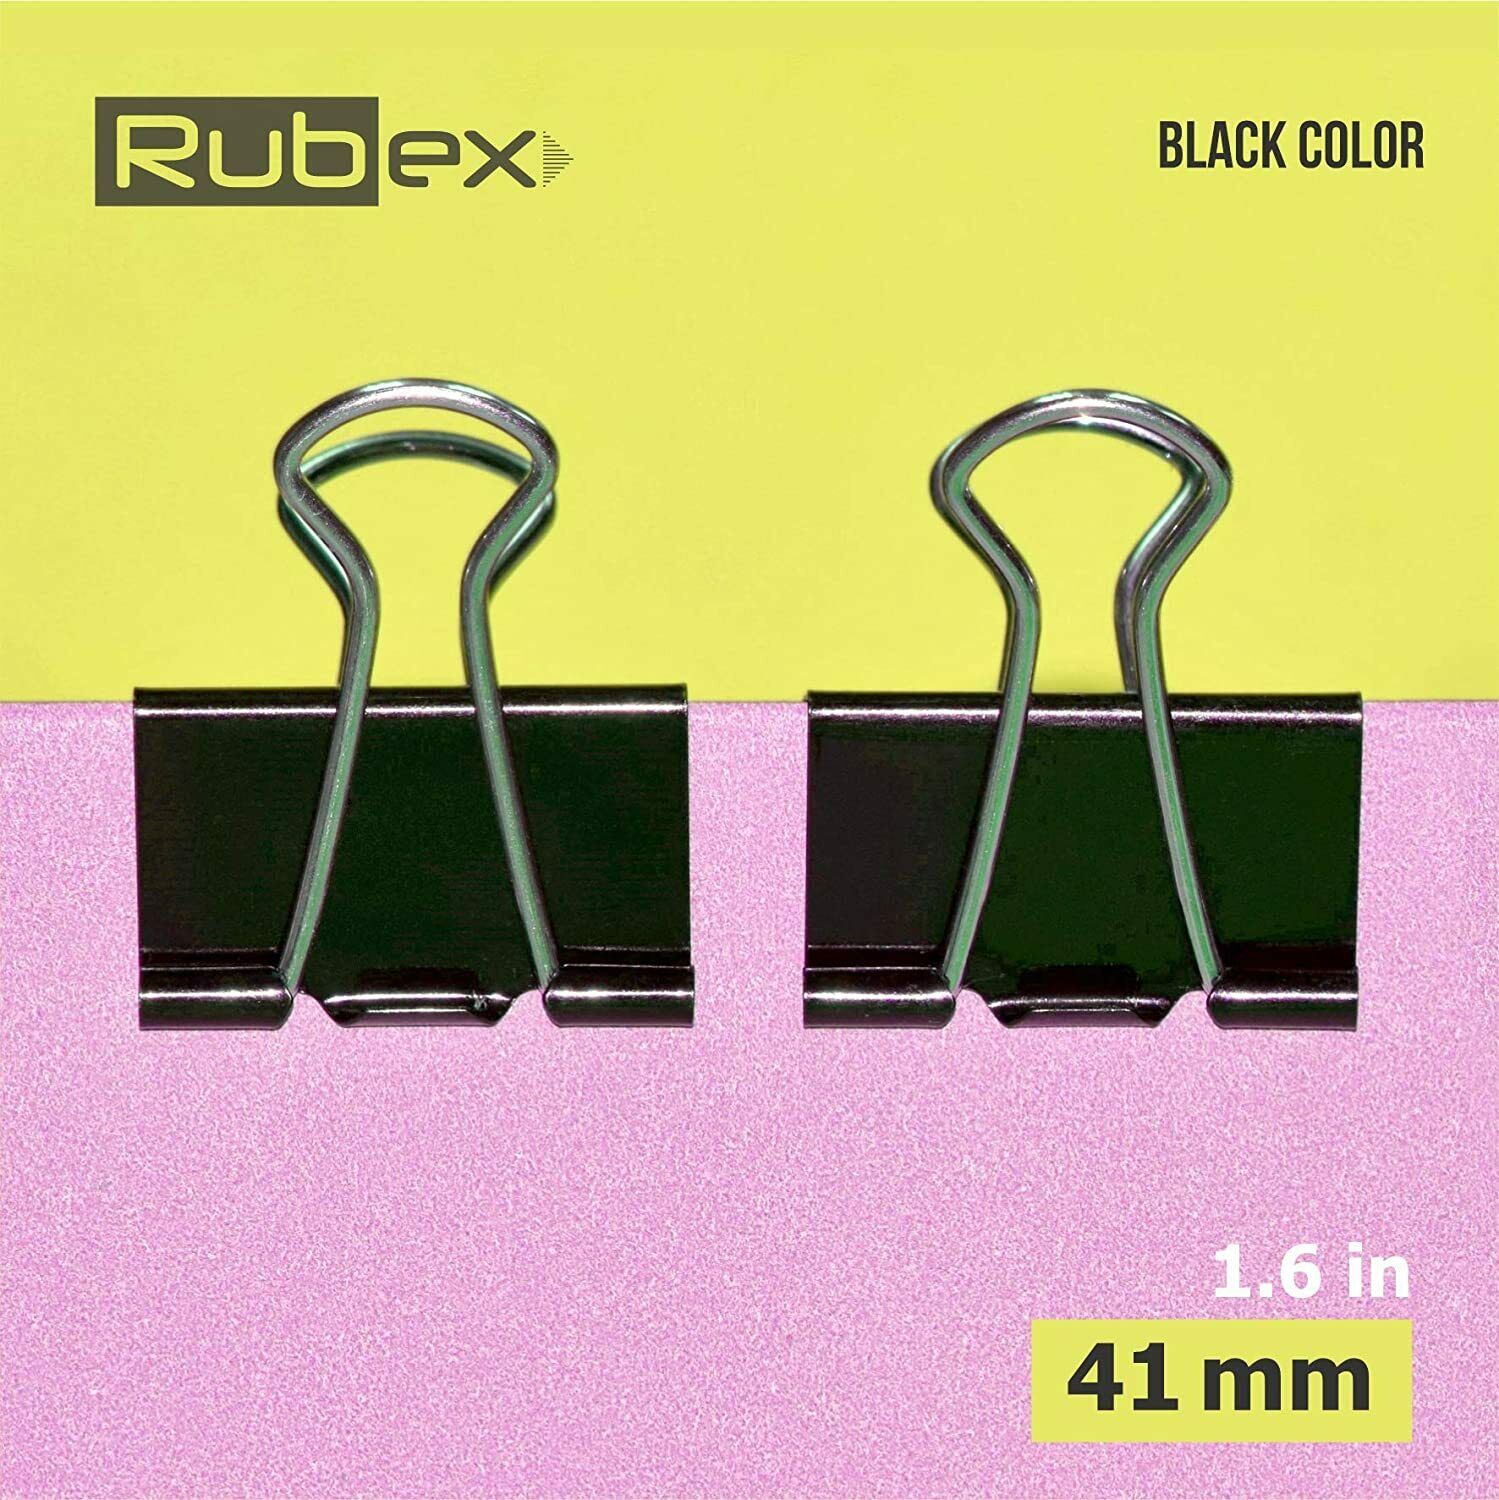 Rubex Binder Clips Black Large Binder Clips Jumbo Binder Clips 1.6 Inch 36 Count